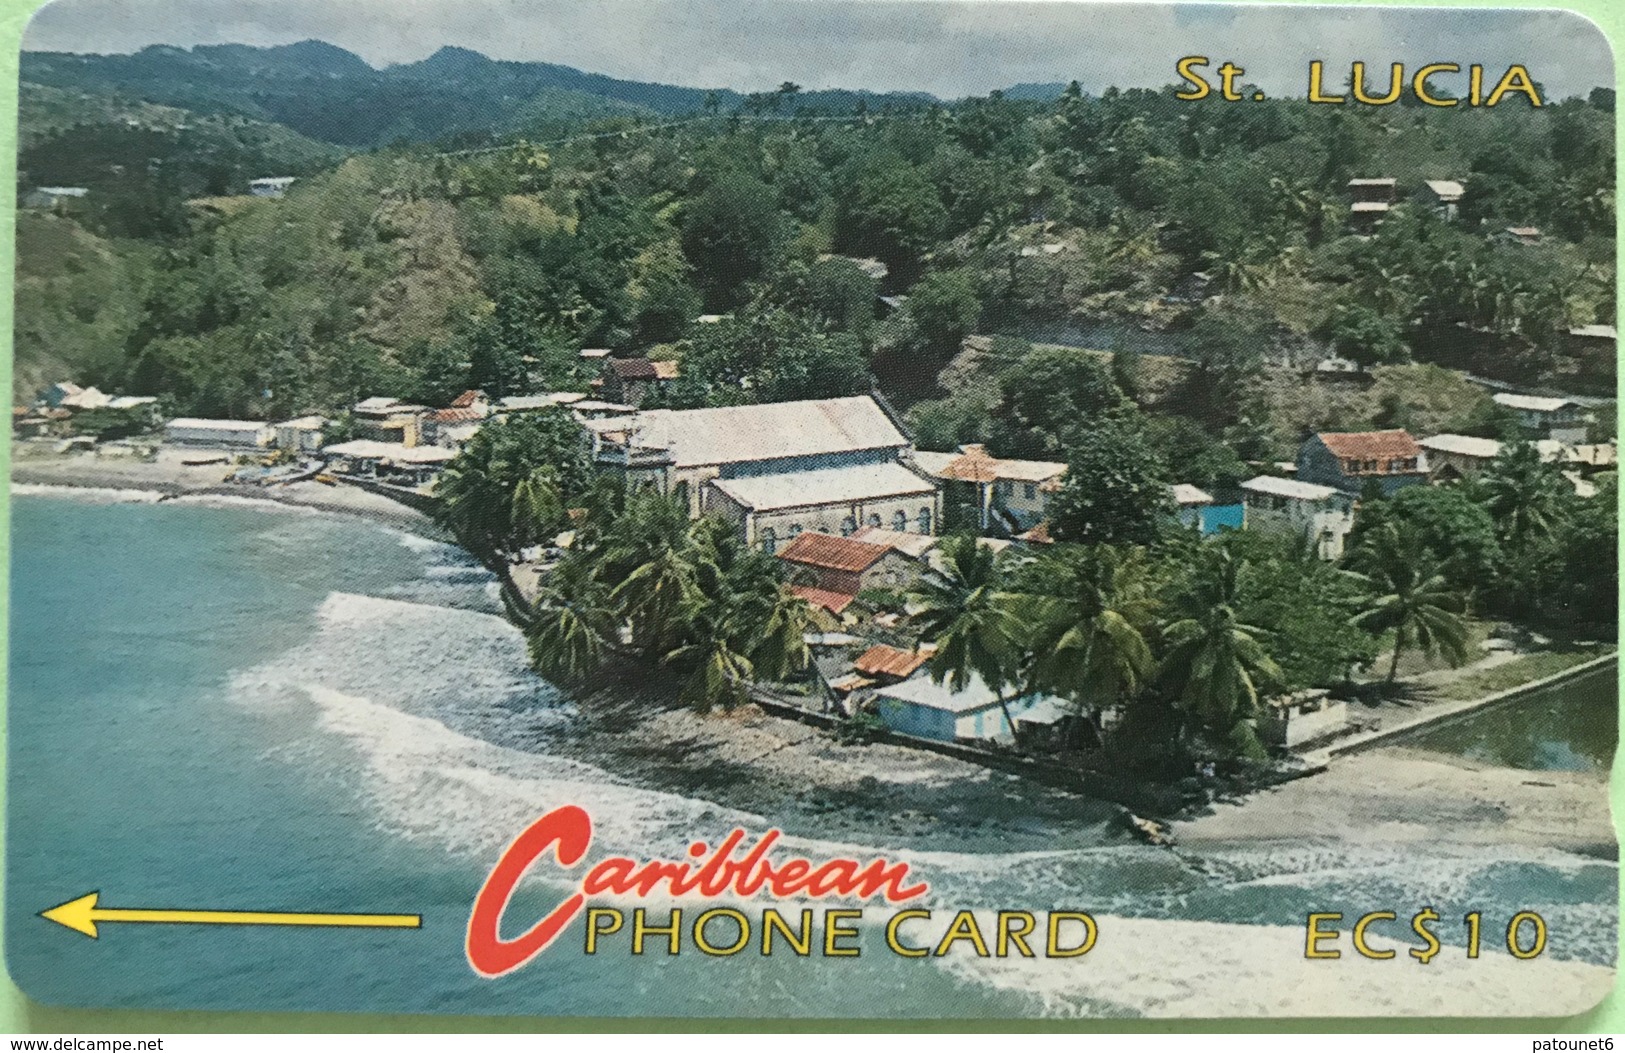 SAINTE LUCIE  -  Phonecard  - Cable & Wireless  -  EC $ 10 - Saint Lucia